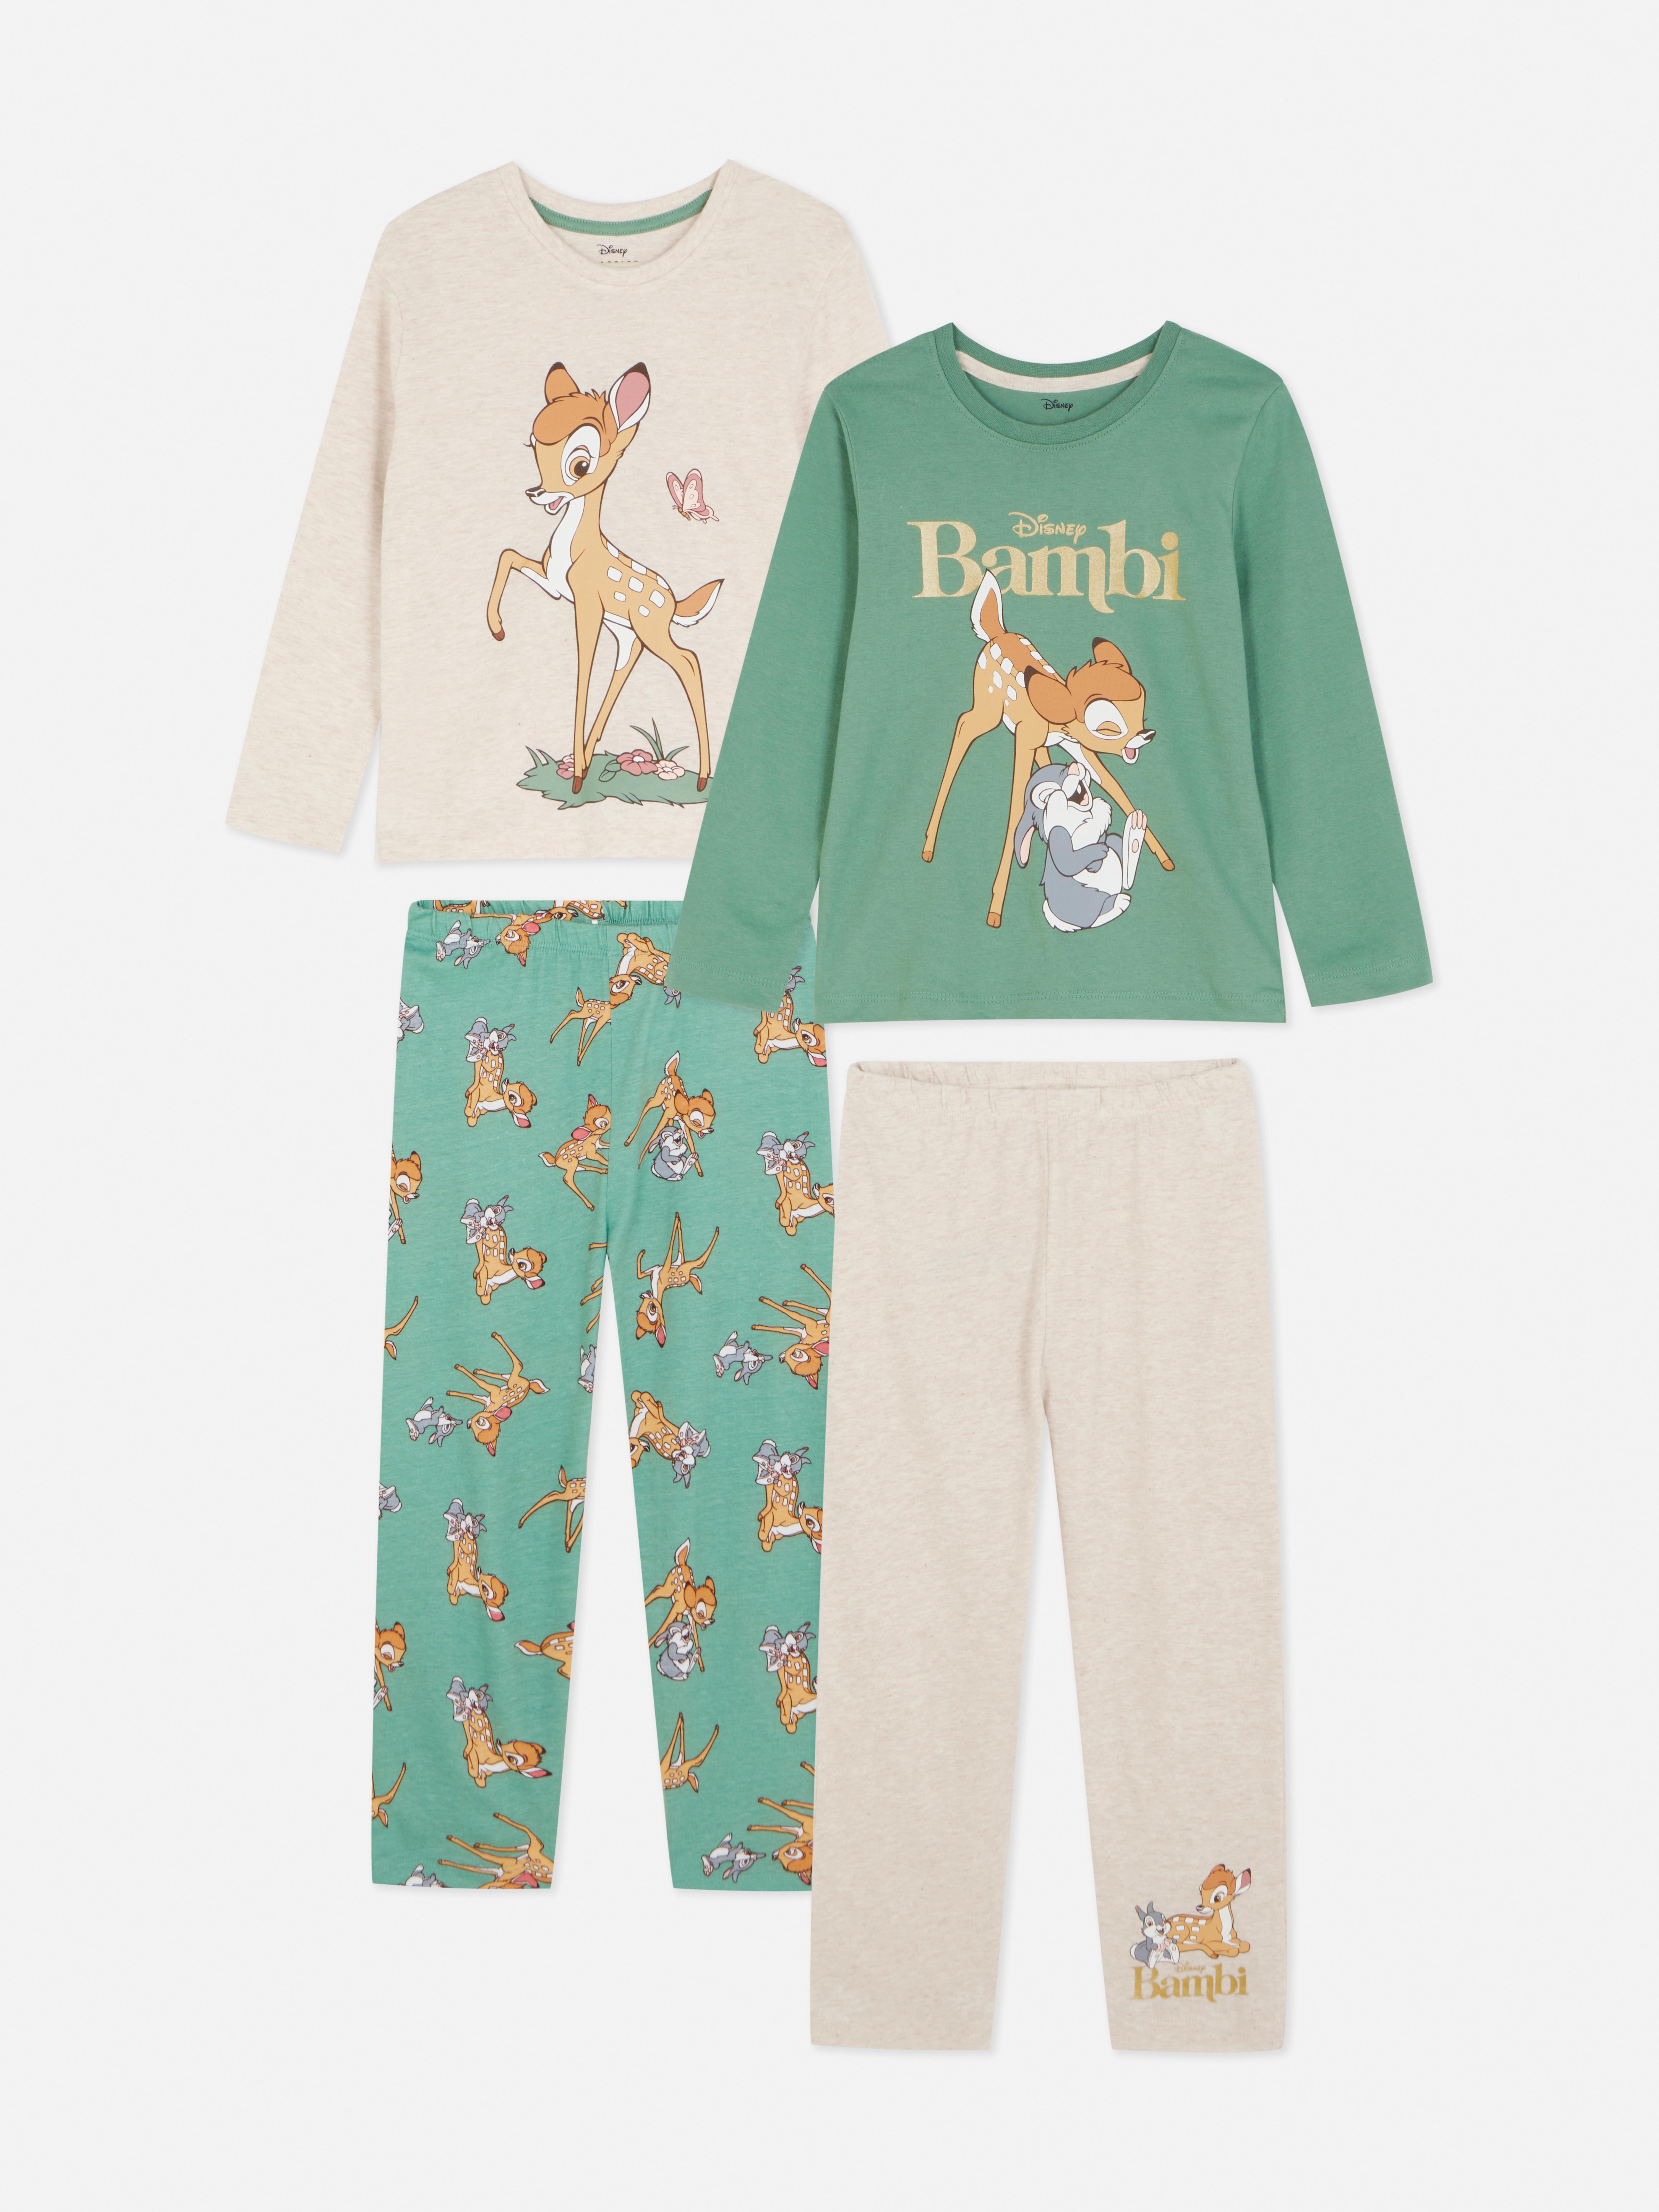 Pyjama Disney's Bambi, set van 2